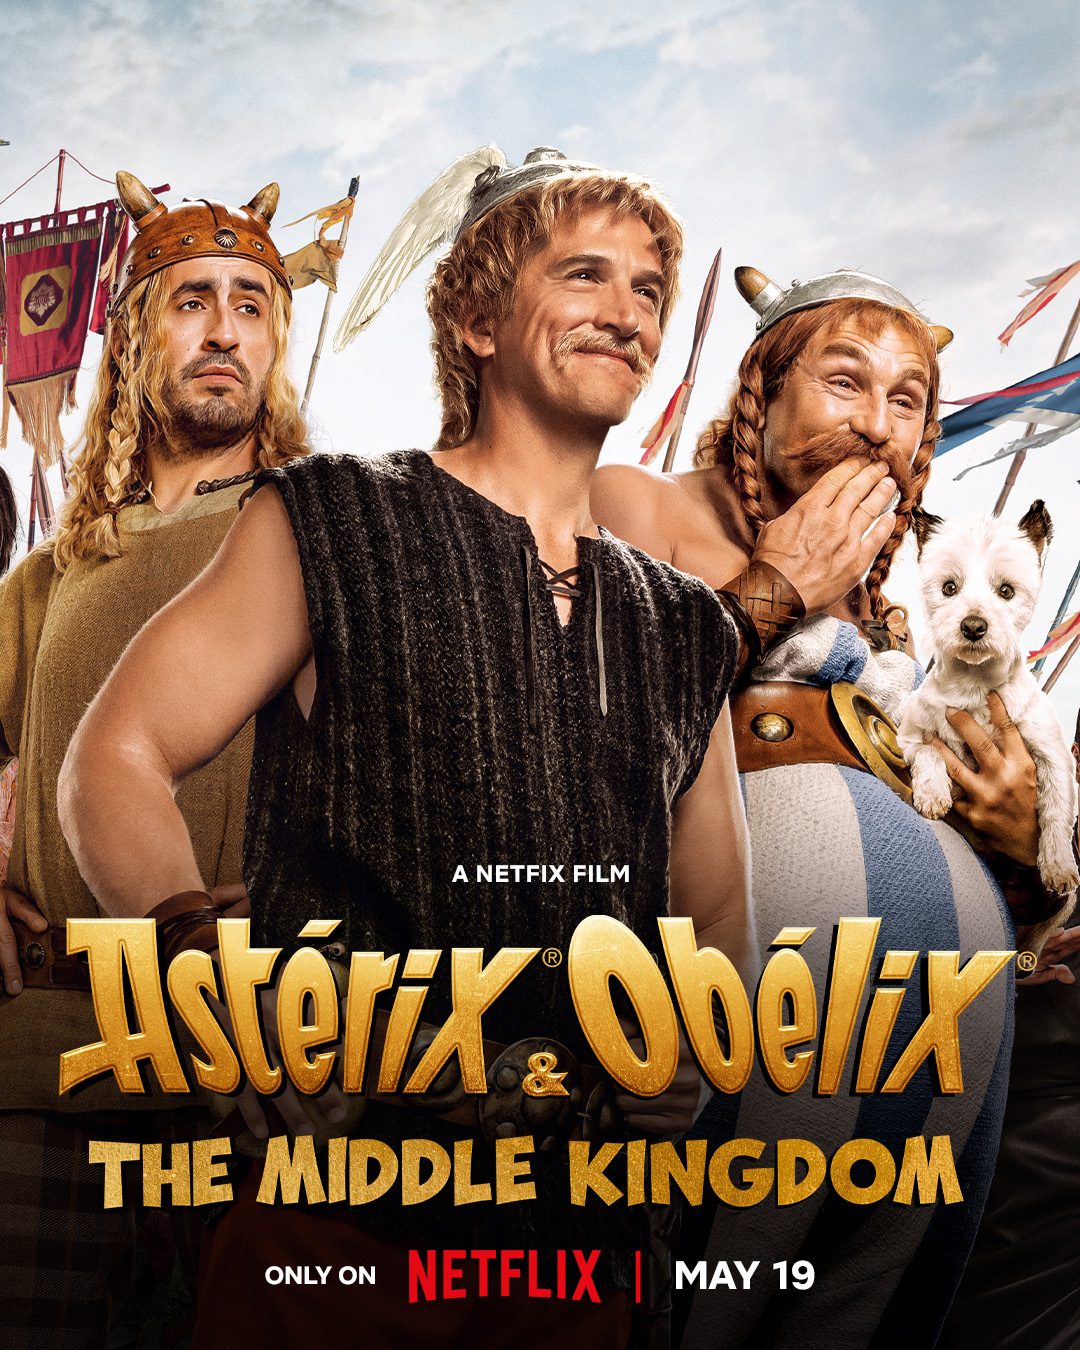 ASTERIX & OBELIX: THE MIDDLE KINGDOM